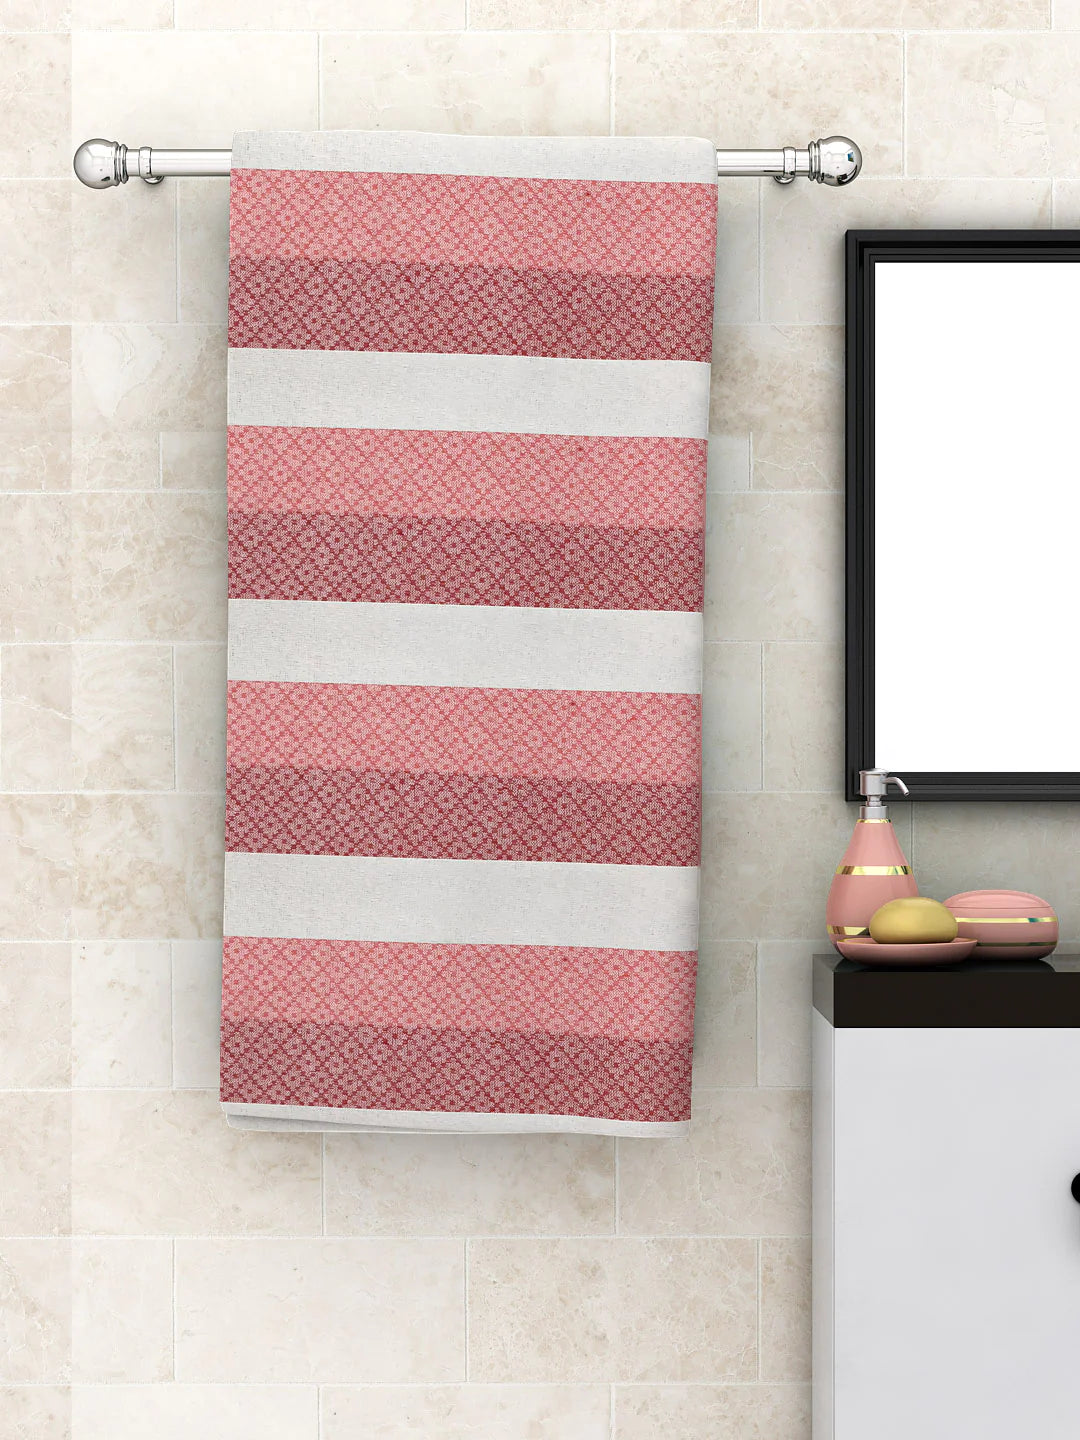 Athom Living Modern Checks Pink Light Weight Woven Cotton Bath Towel- Large